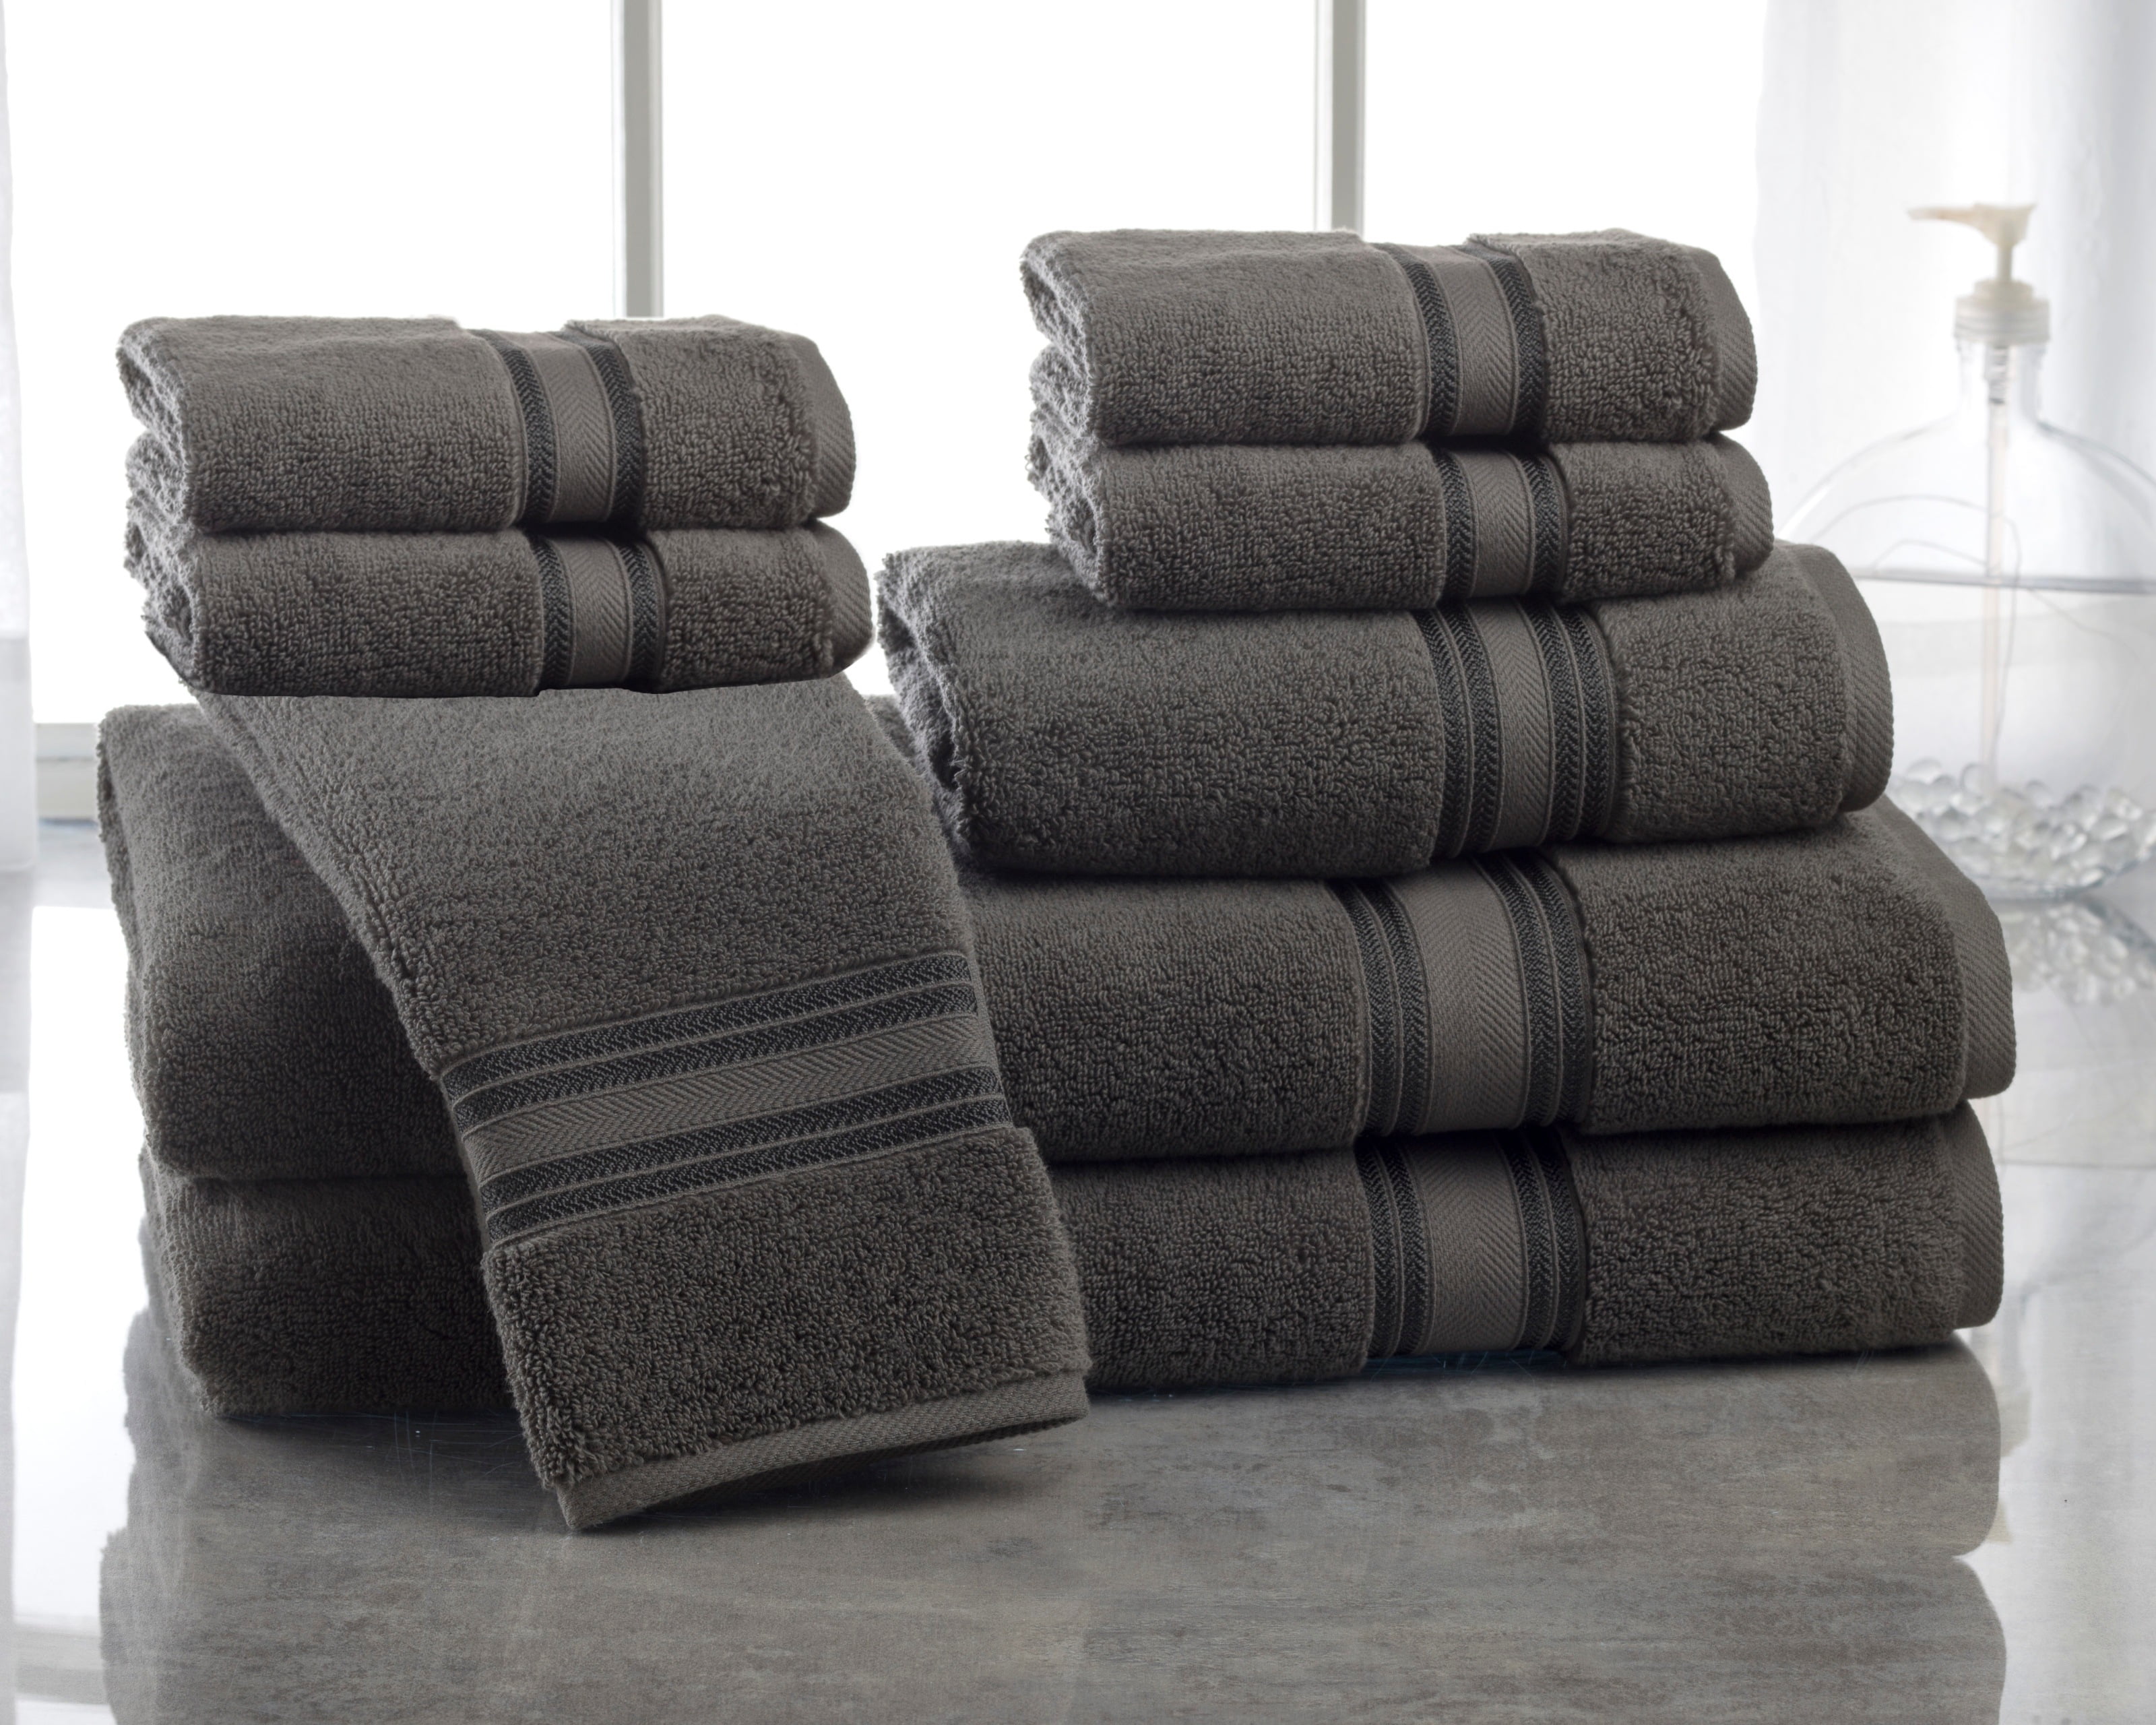 CB Station Luxury 8-Piece Grey Solid Bath Towel Set 6625SET - The Home Depot